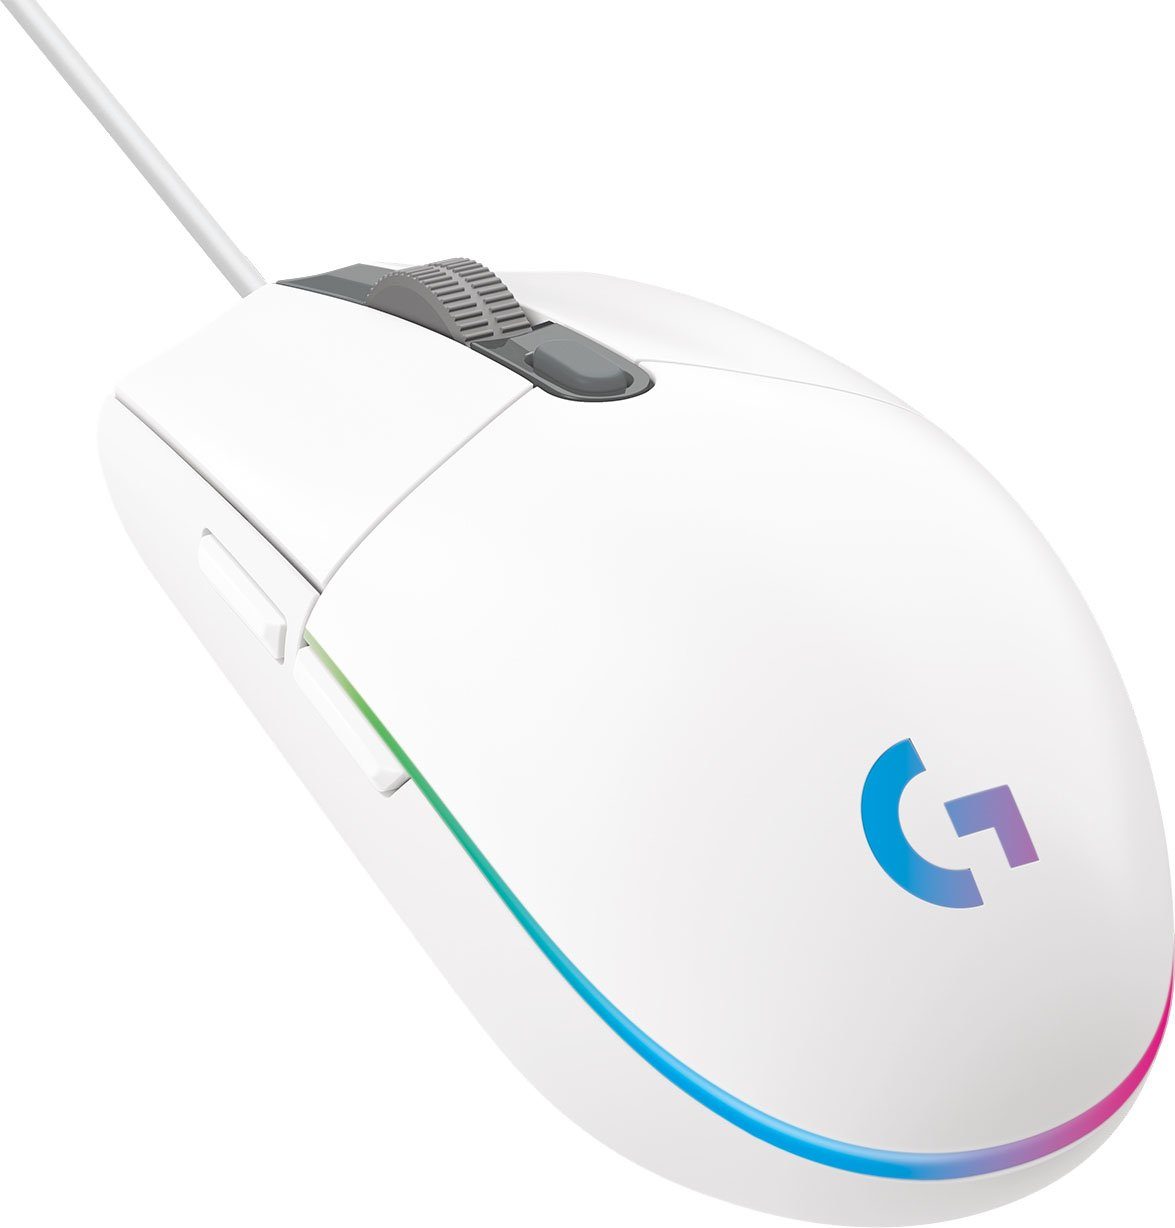 Logitech G203 LIGHTSYNC Gaming-Maus (kabelgebunden, 1 dpi) weiß